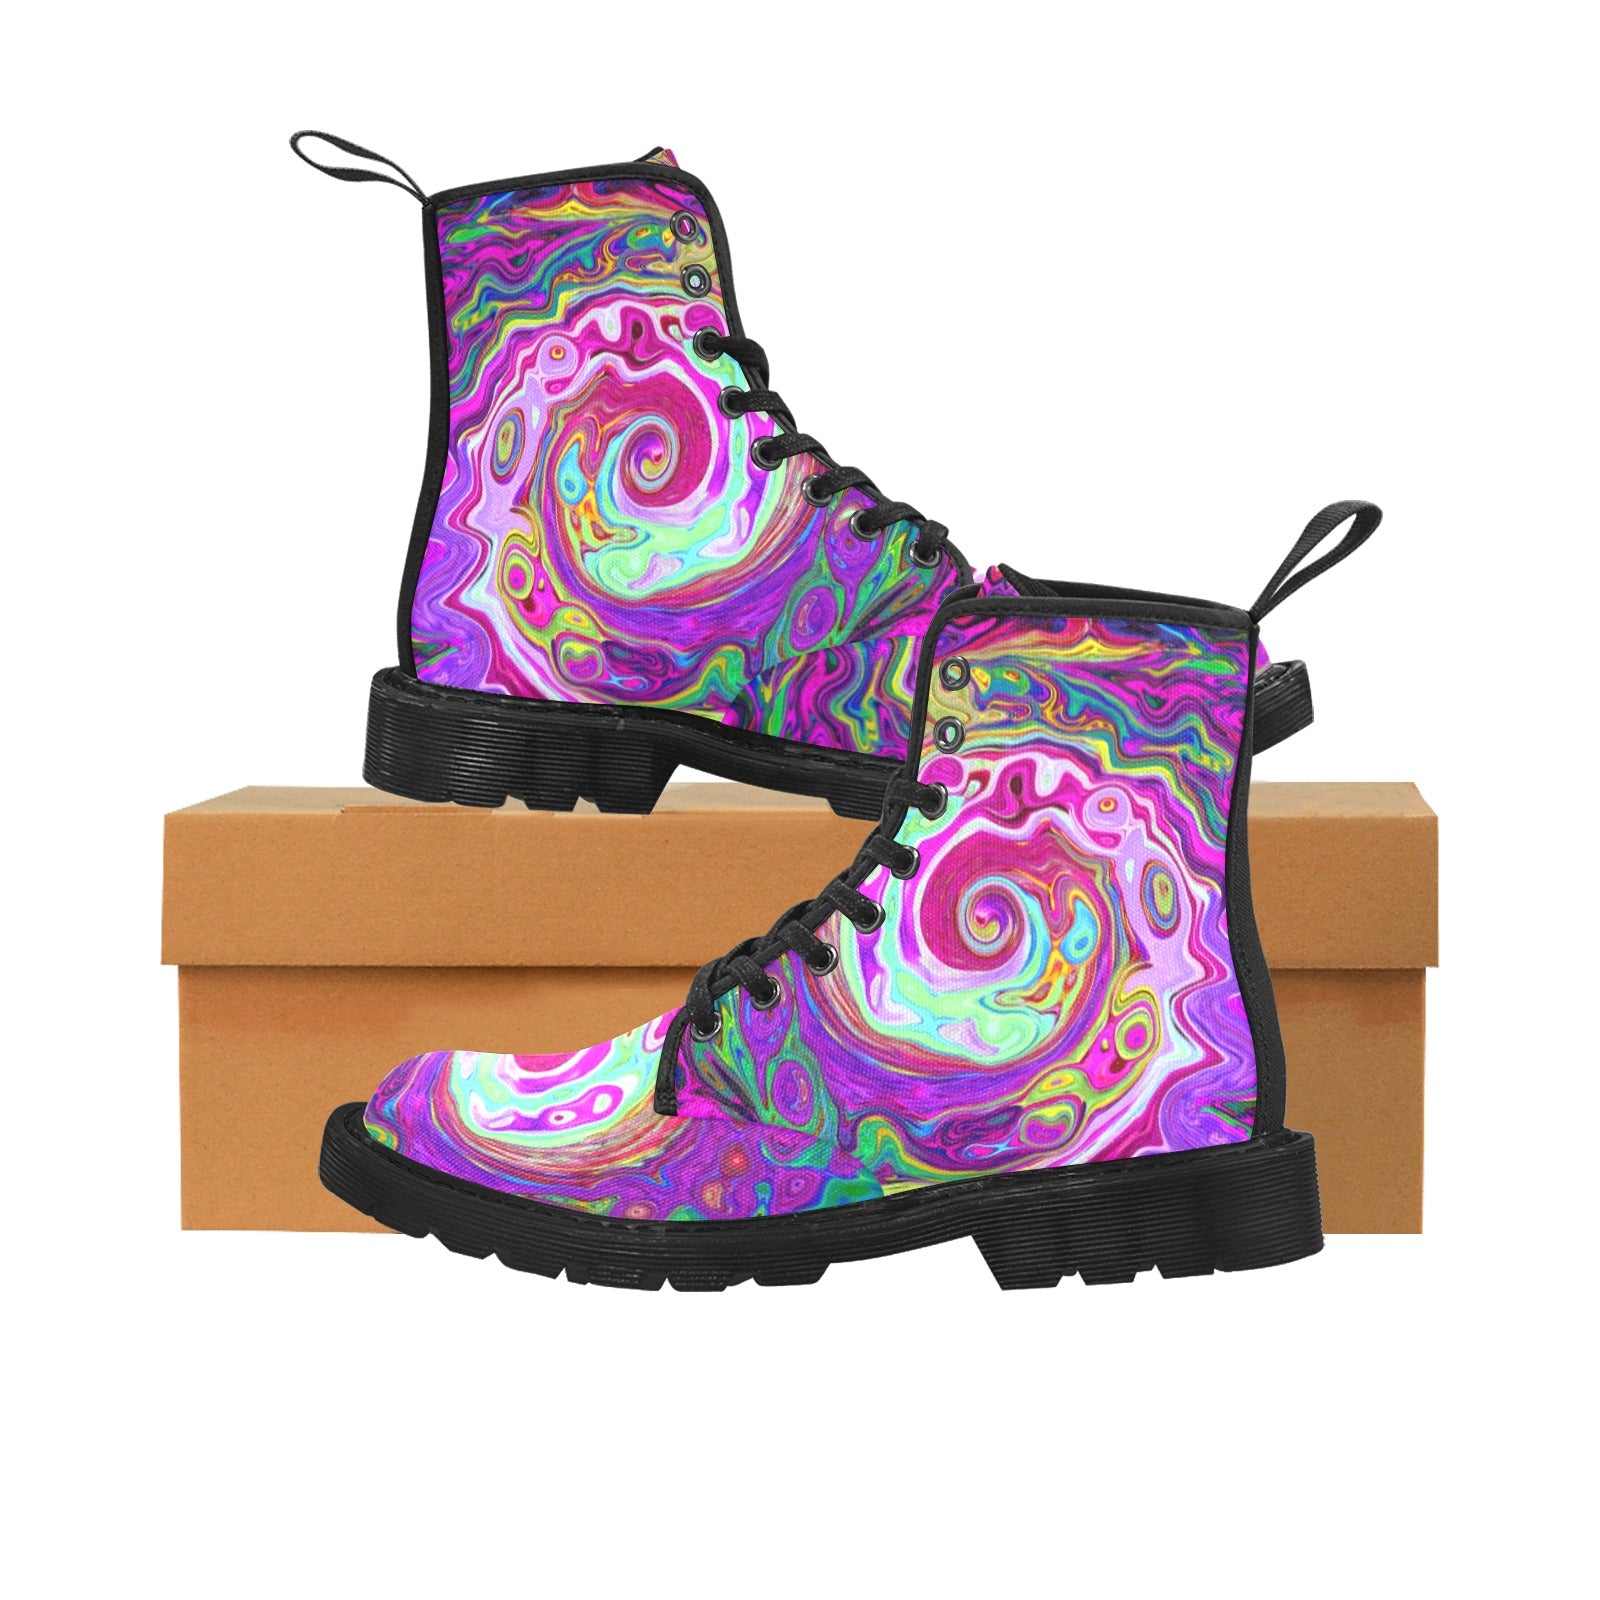 Boots for Women, Groovy Abstract Retro Magenta Rainbow Swirl - Black